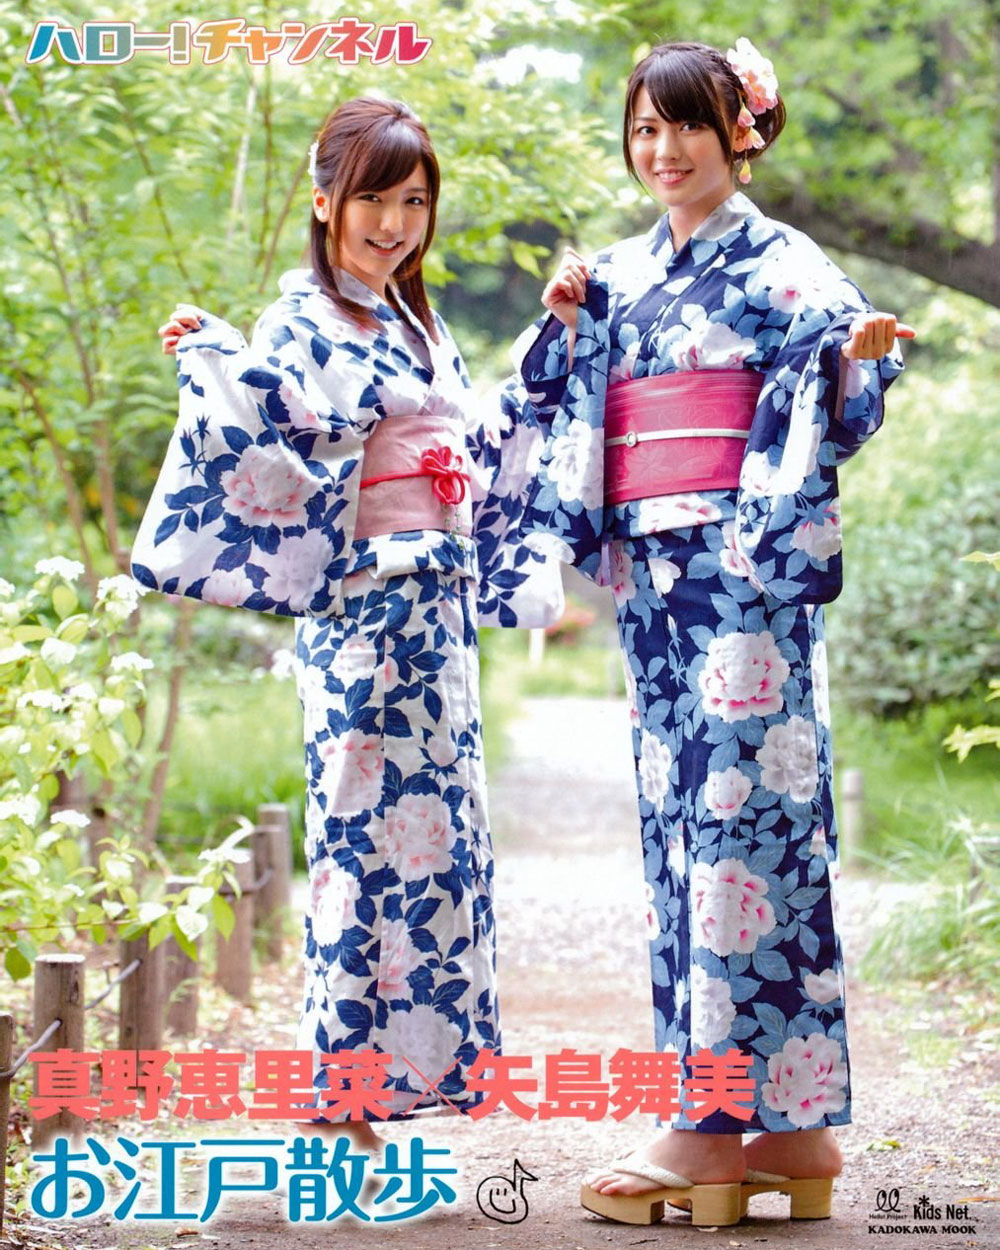 Erina Mano and Maimi Yajima in yukata